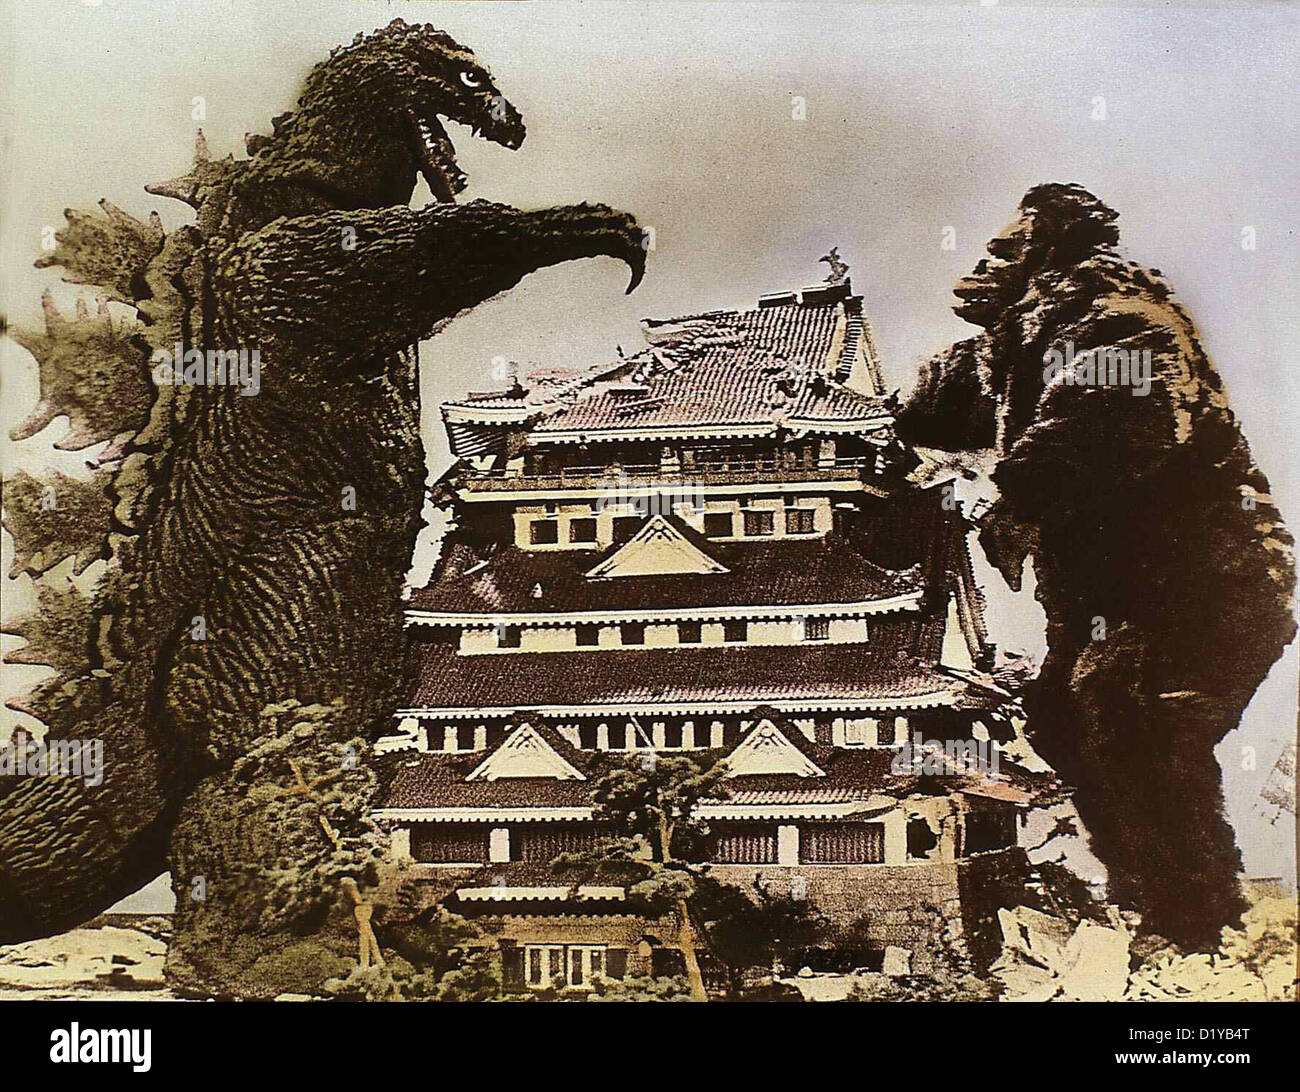 Die Rueckkehr Des King Kong  King Kong Tai Gojira  King Kong rettet Japan vor der Zerstoerung durch den Saurier Godzilla. *** Stock Photo